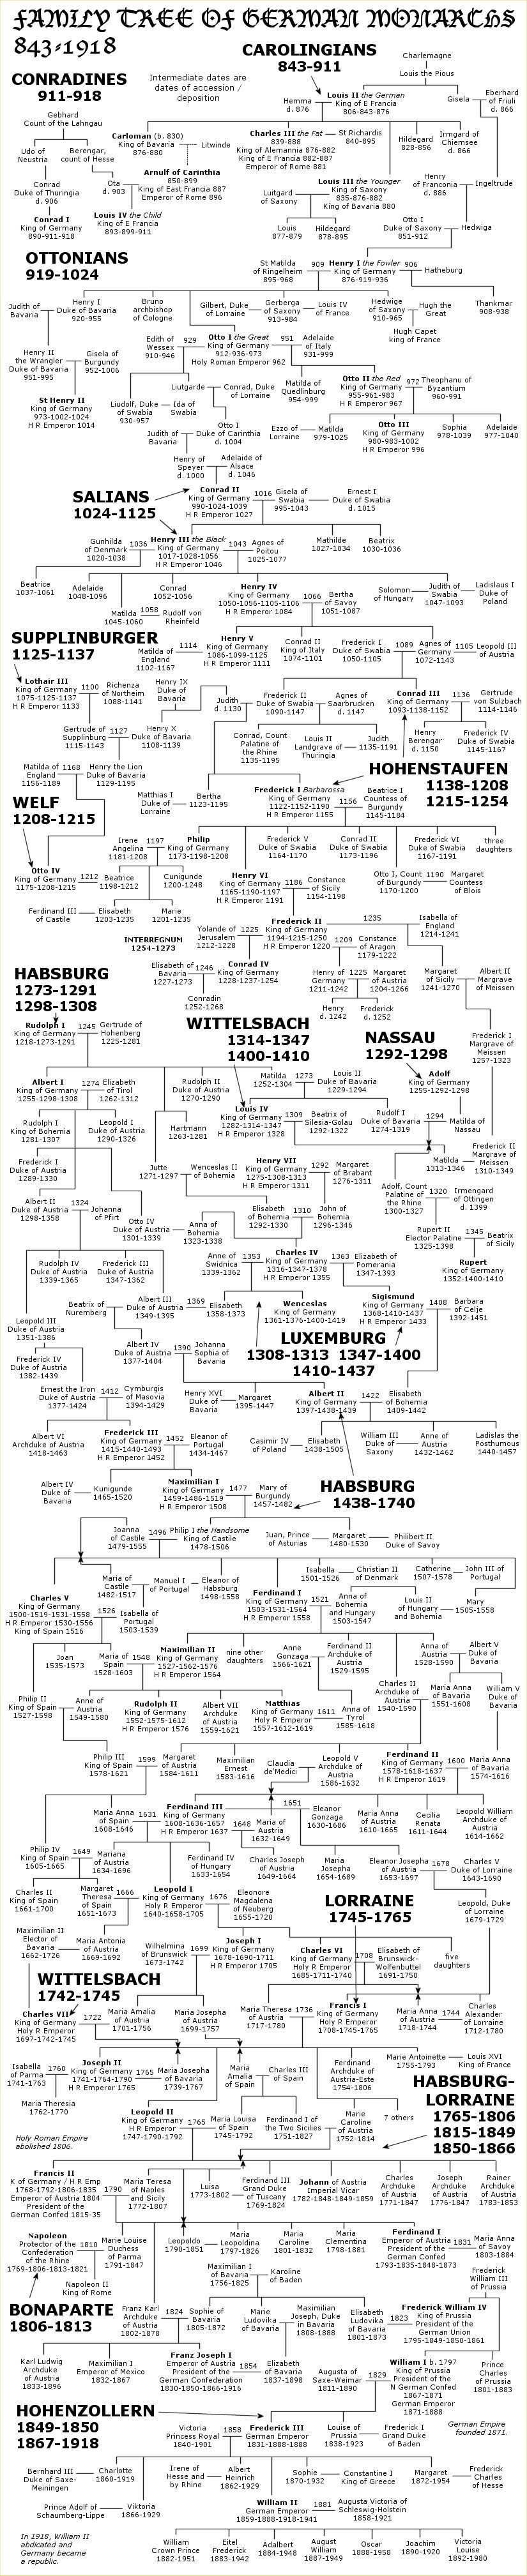 German monarchs family tree.jpg